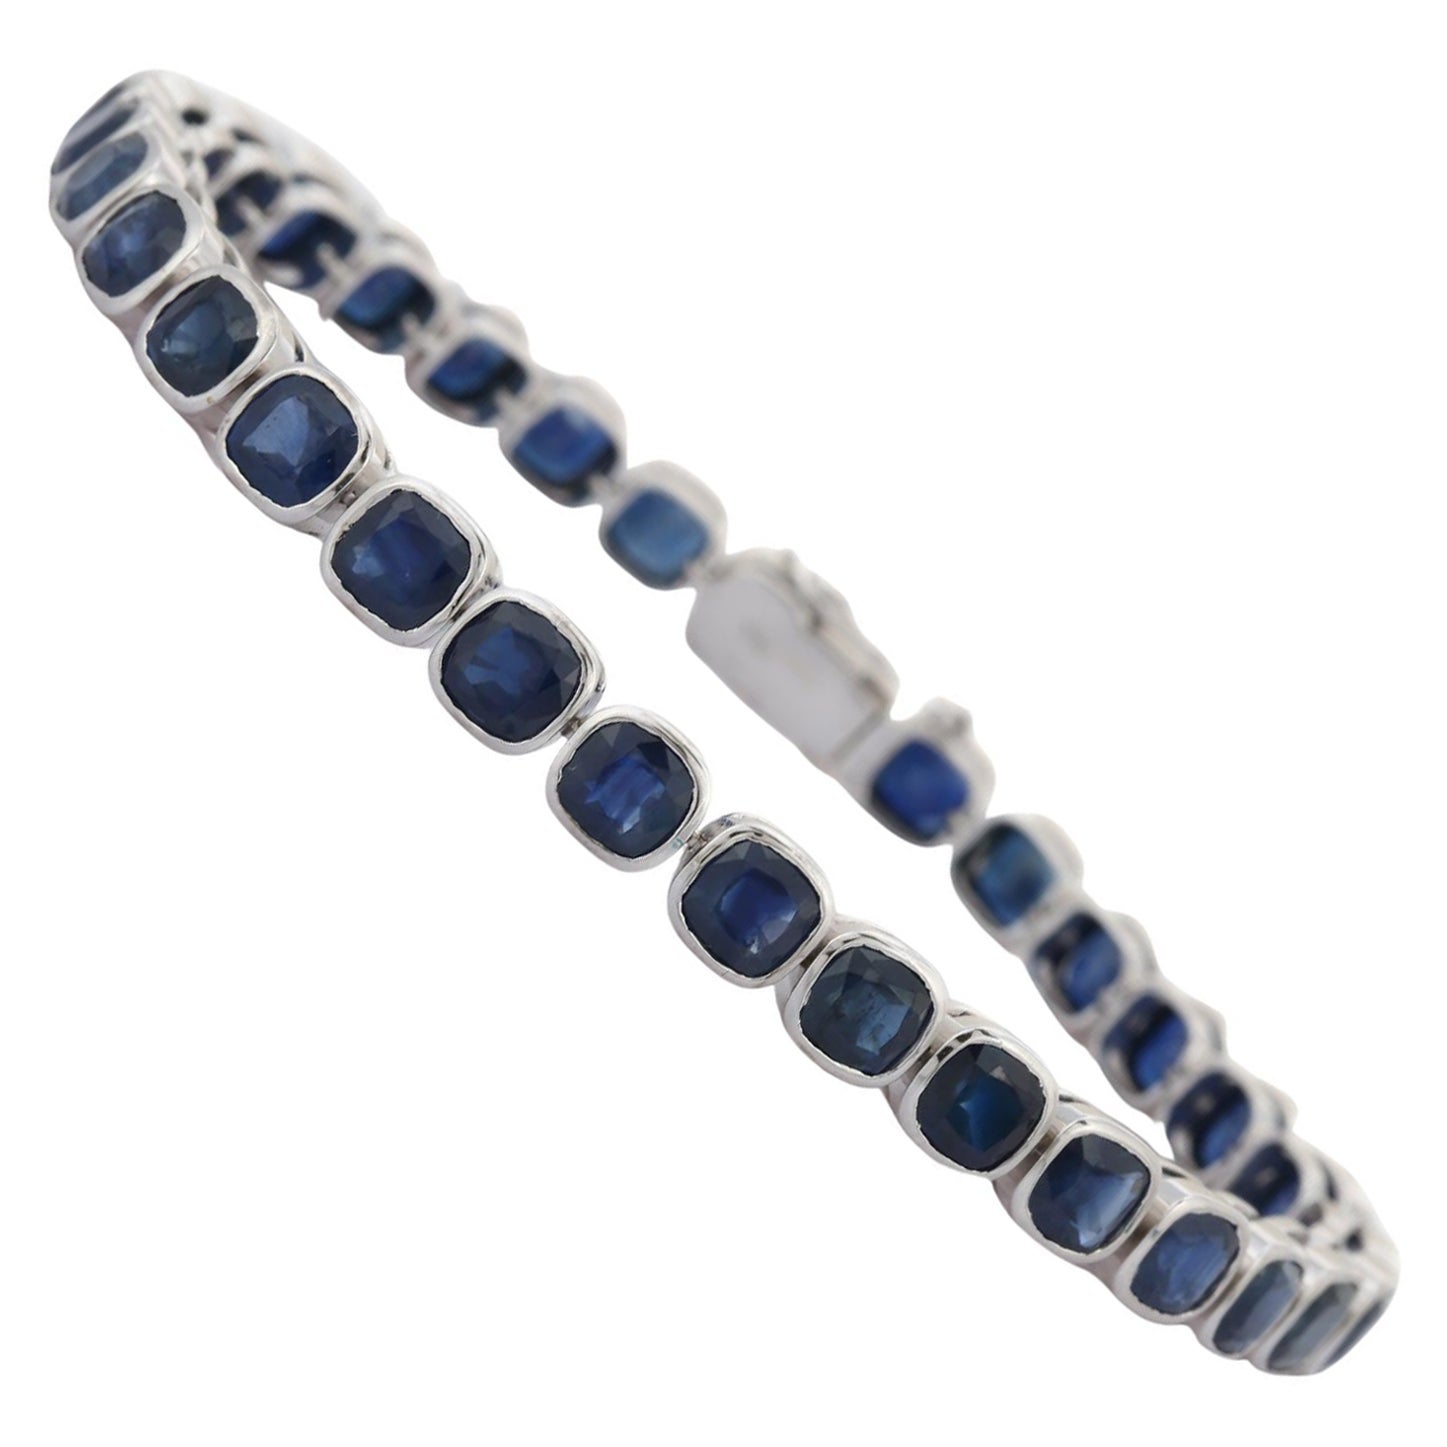 Bracelet tennis en or blanc 18 carats avec saphir bleu foncé de 19,15 carats